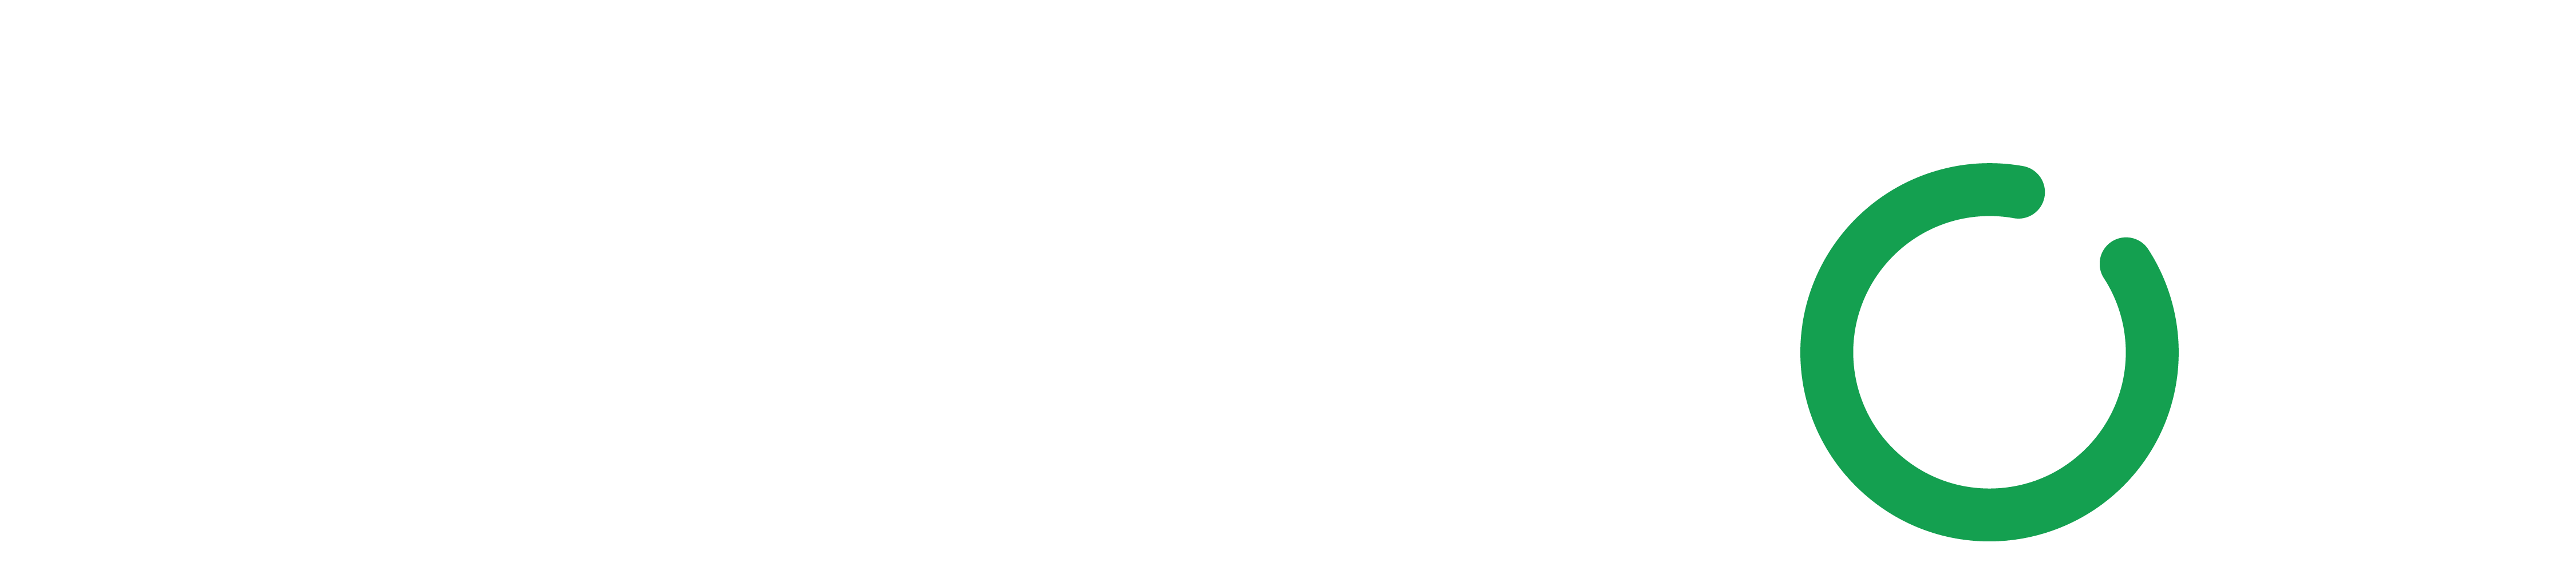 NI-SPACE_Digital_Logo_White_Horizontal